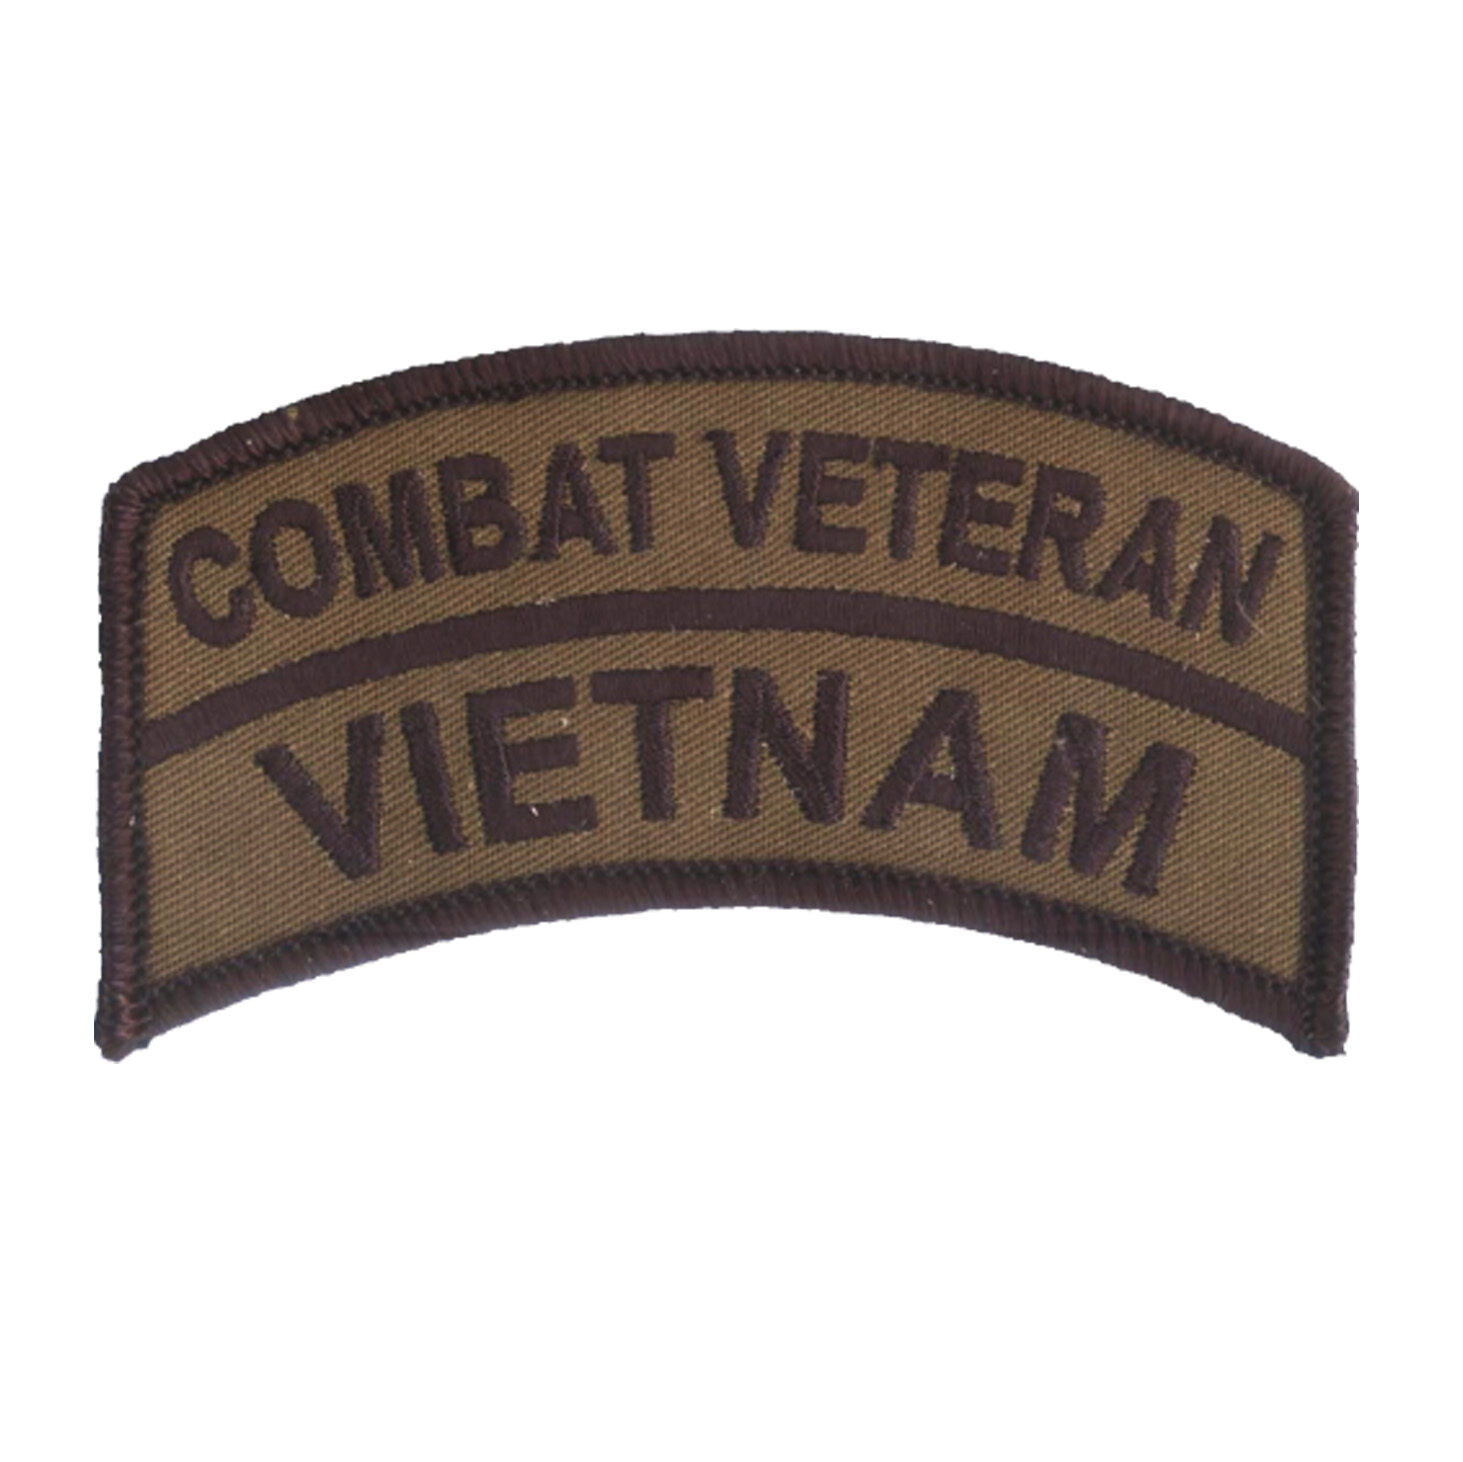 OD Vietnam Combat Veteran Embroidered Patch - US Army - USMC - Navy SEALS - LRRP